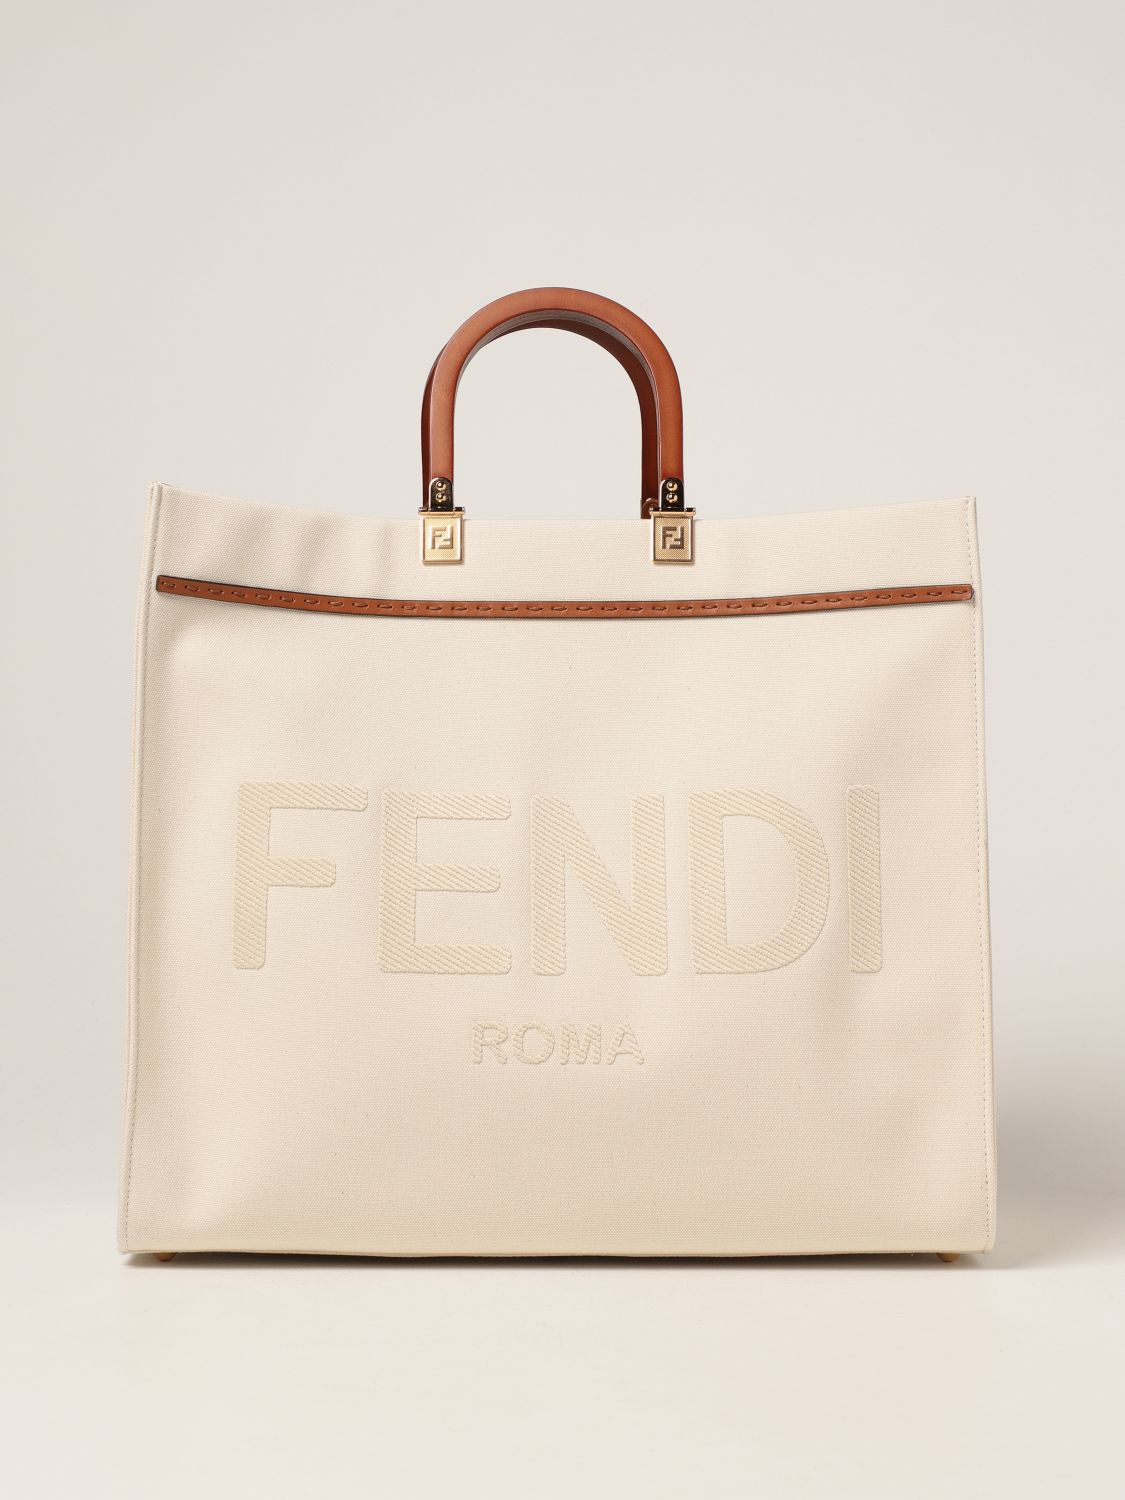 FENDI: Sunshine bag in canvas with big Roma logo | Tote Bags Fendi ...